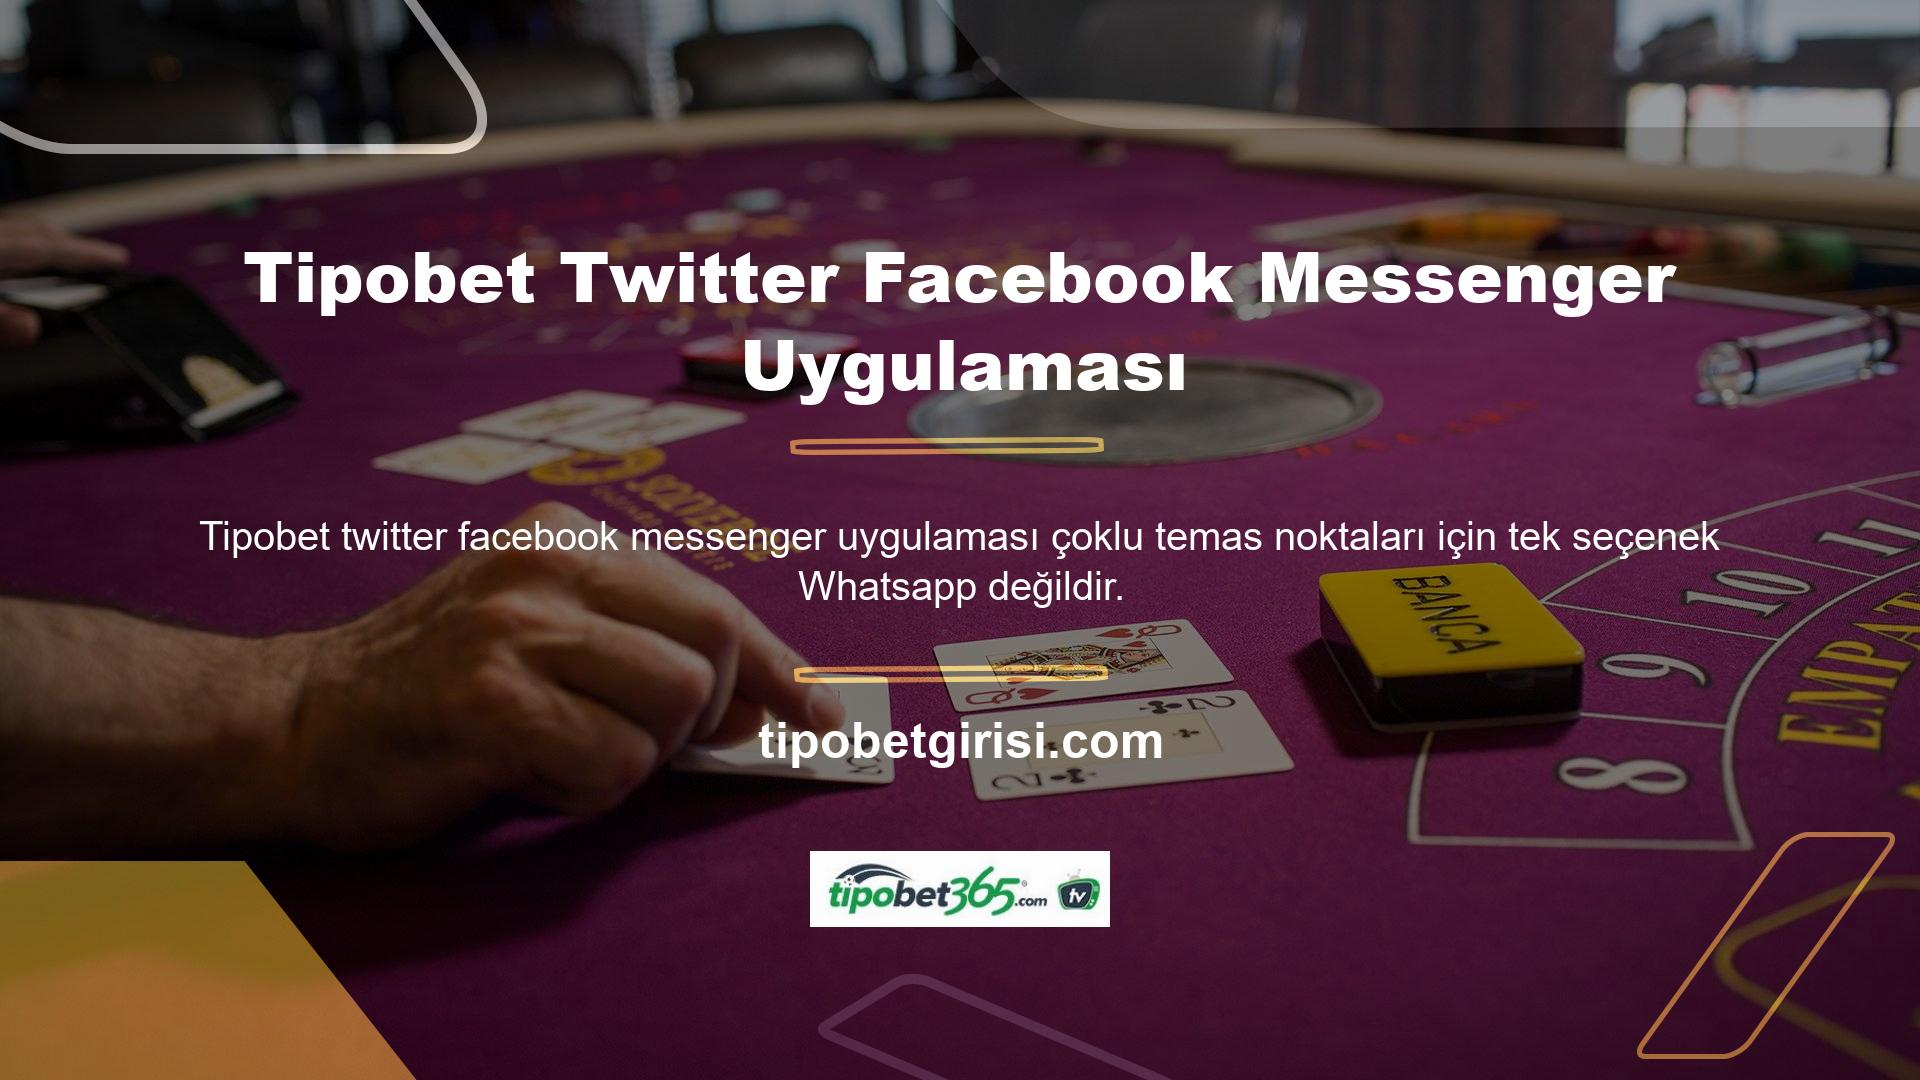 Tipobet Twitter-Facebook Messenger Uygulaması Twitter-Facebook Messenger programı da oldukça popüler